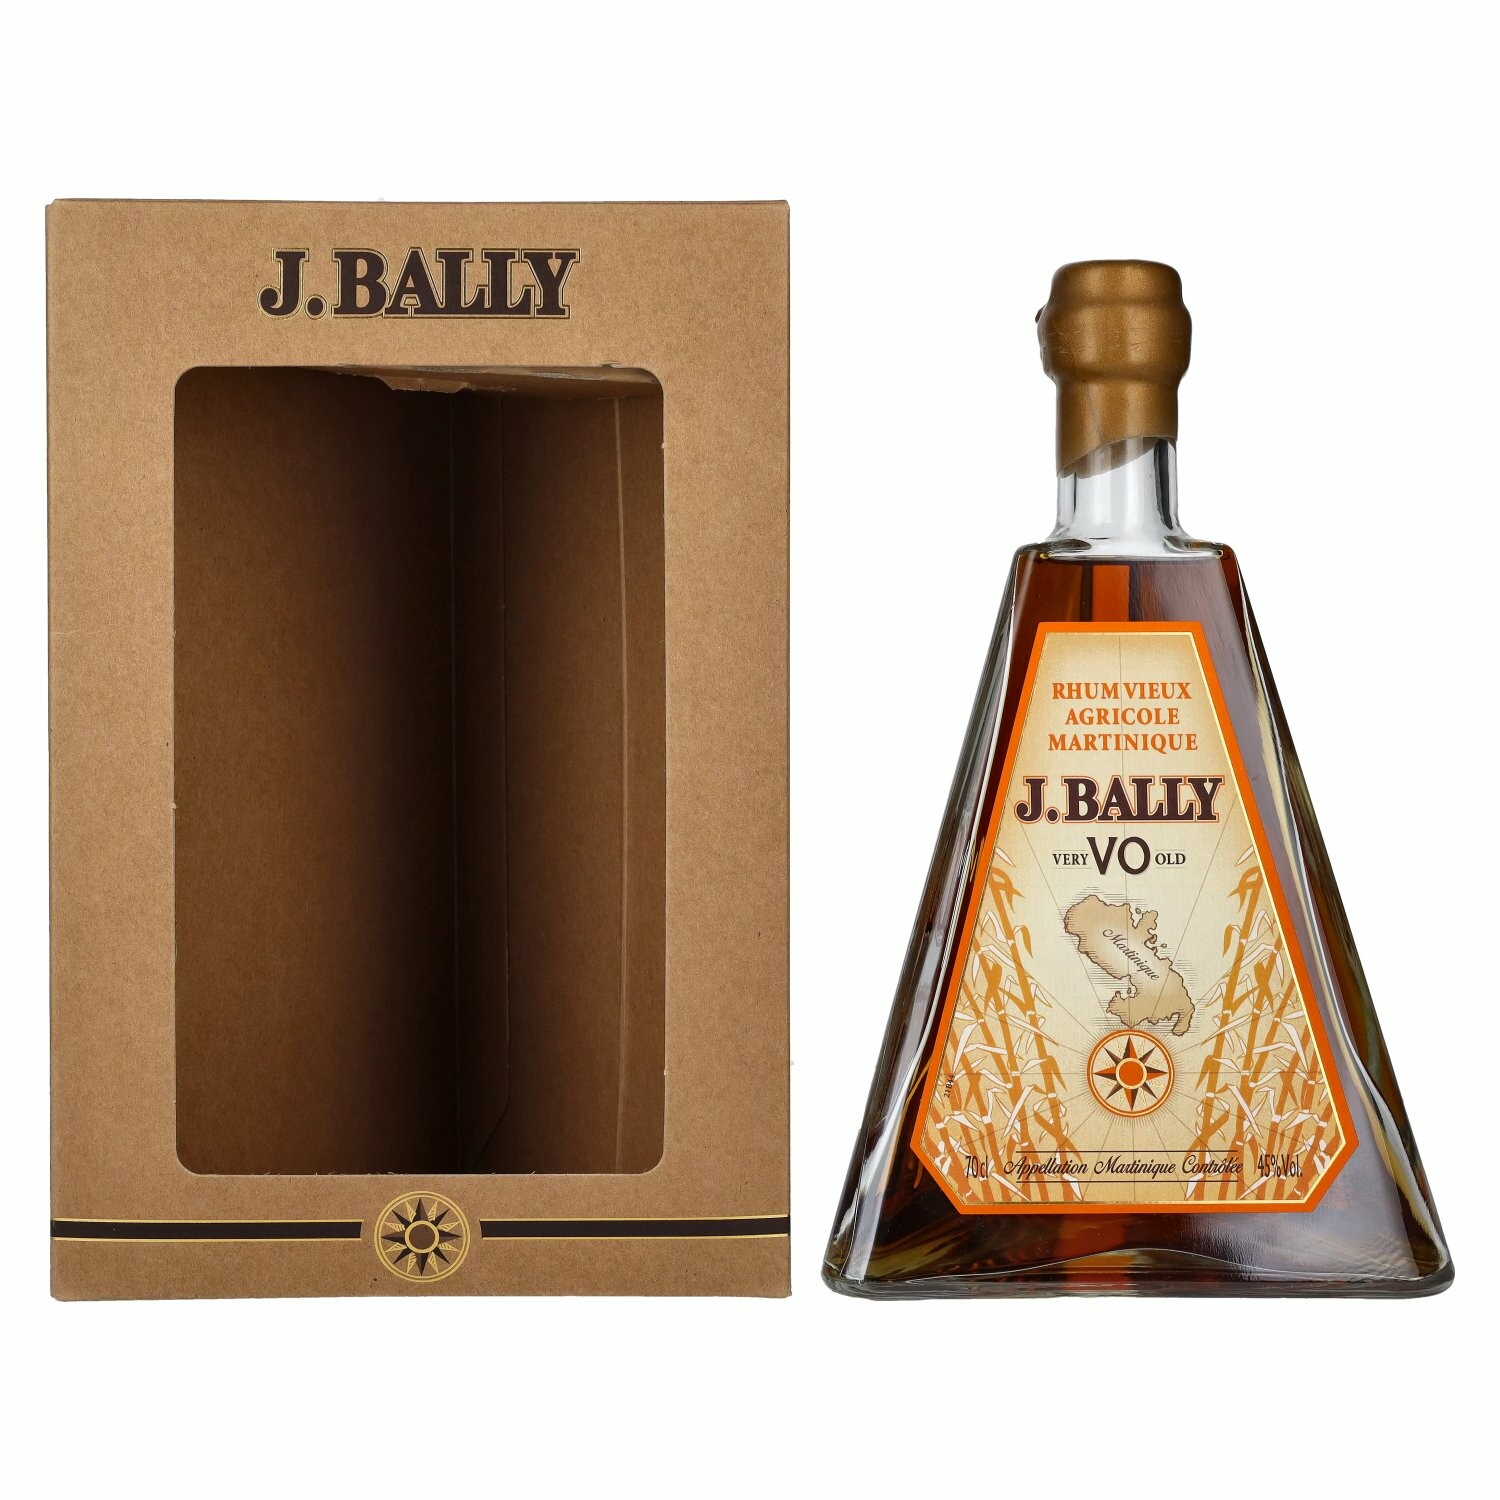 J. Bally Rhum Vieux Agricole VO 45% Vol. 0,7l in Giftbox